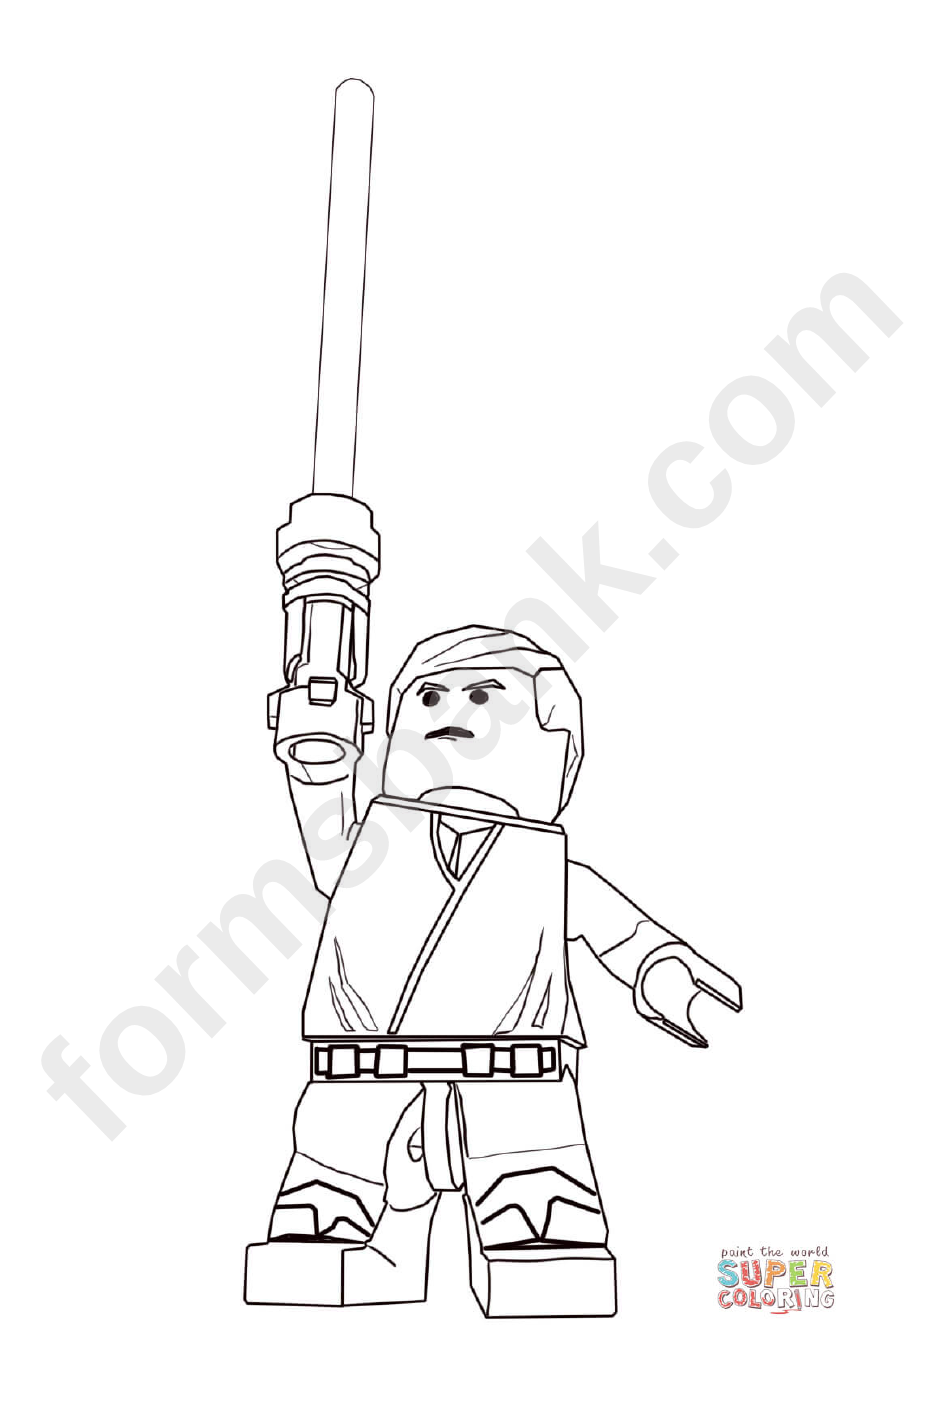 Lego Star Wars - Luke Skywalker Coloring Page